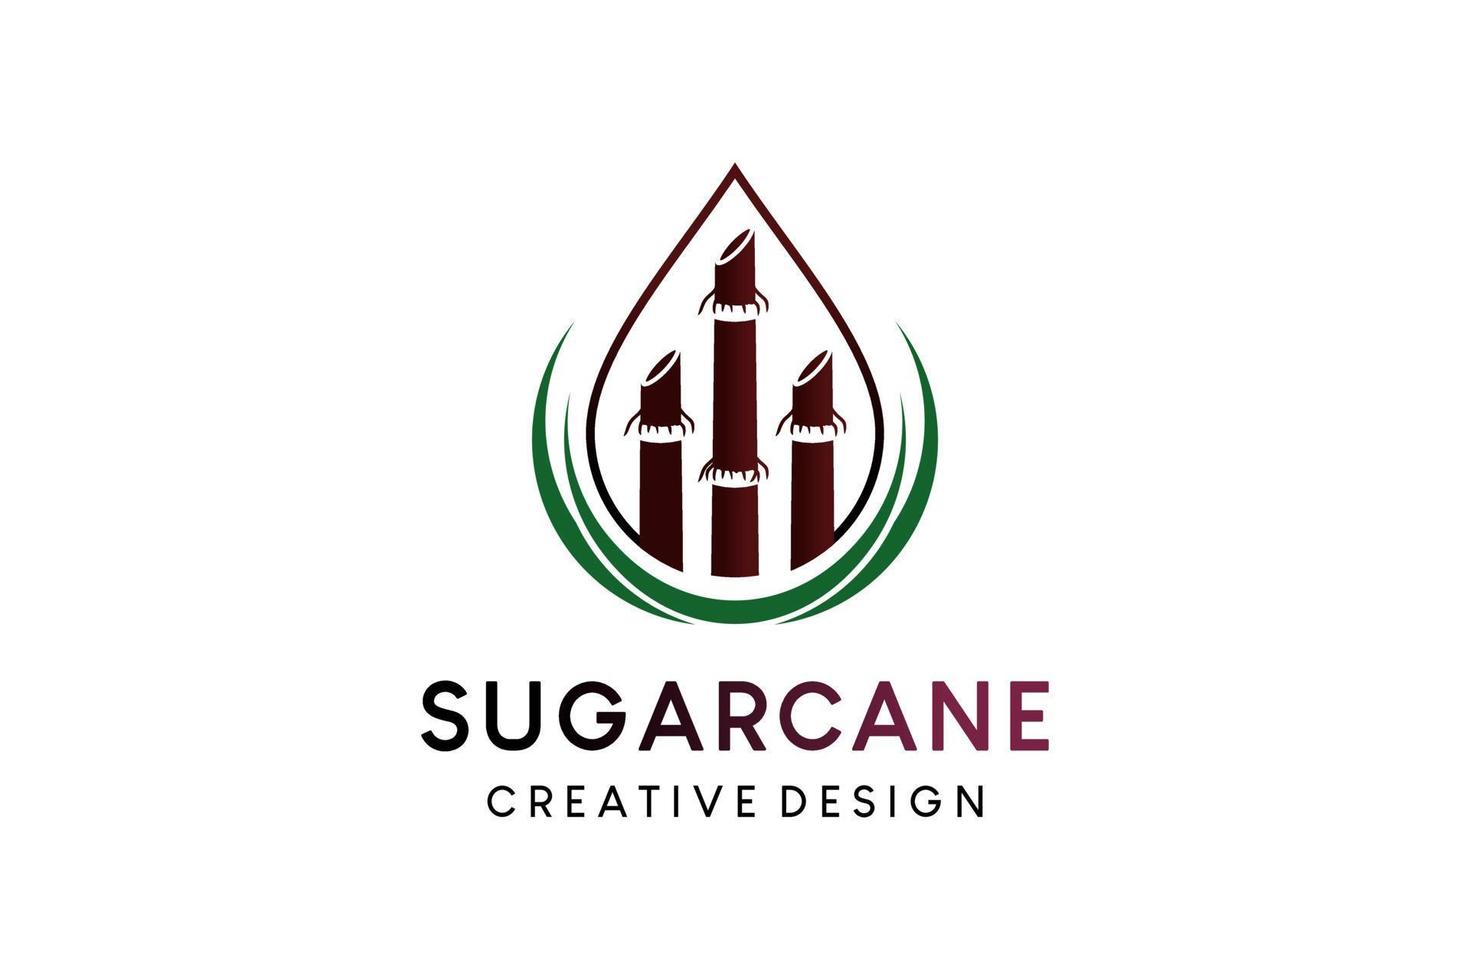 Sugarcane vector illustration logo design in water drops concept